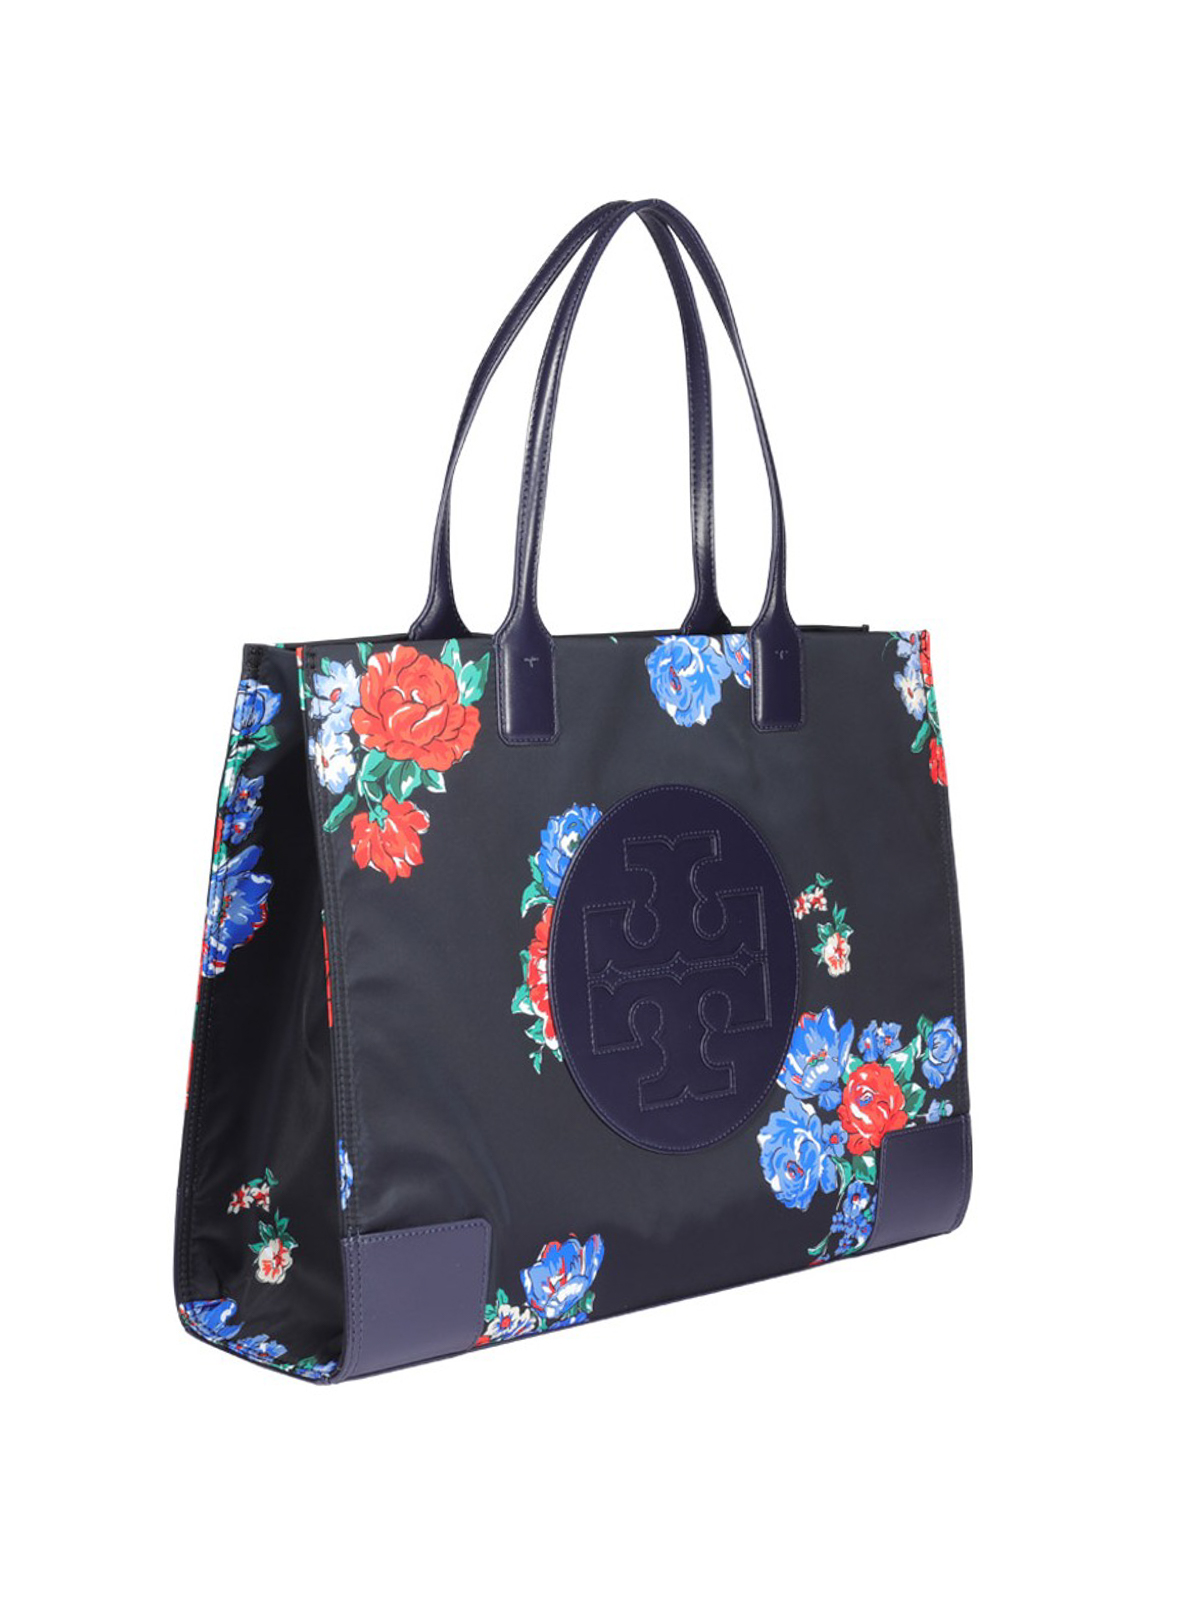 New Tory Burch Ella Quilt Micro Floral Cross Body/Tote Bag